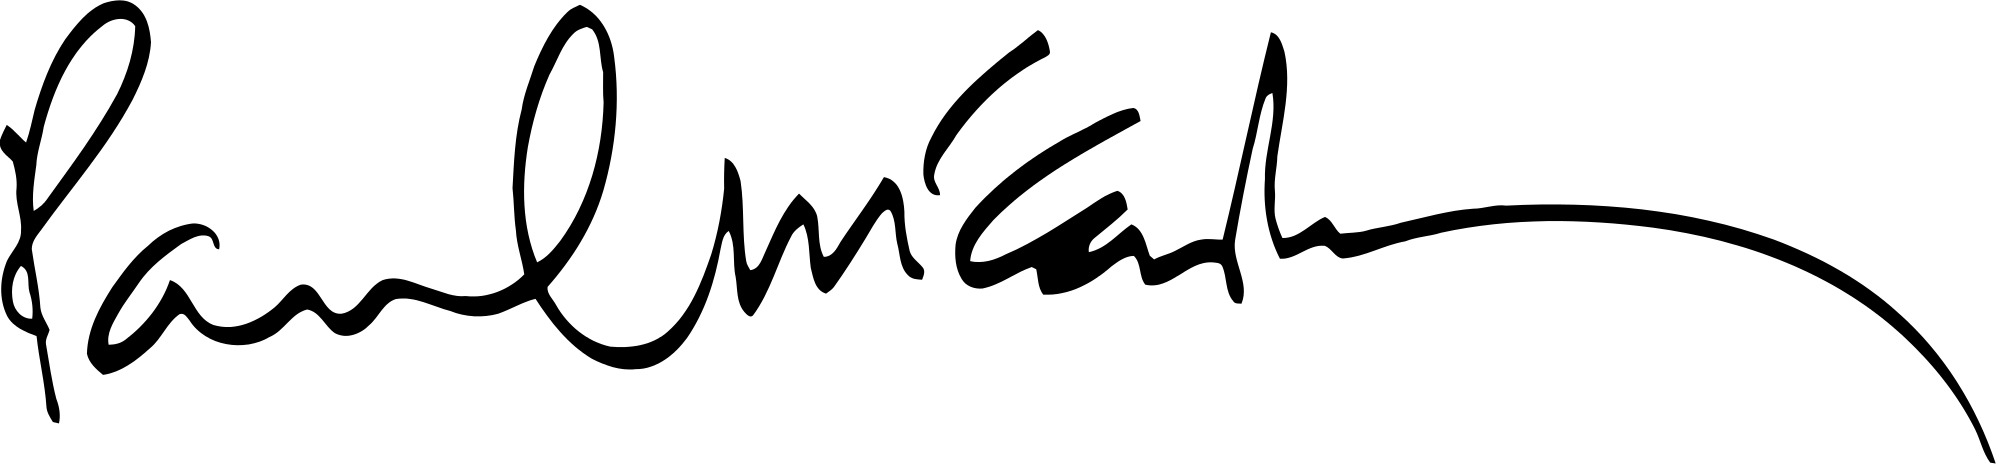 Paul Mc Cartney Signature icons